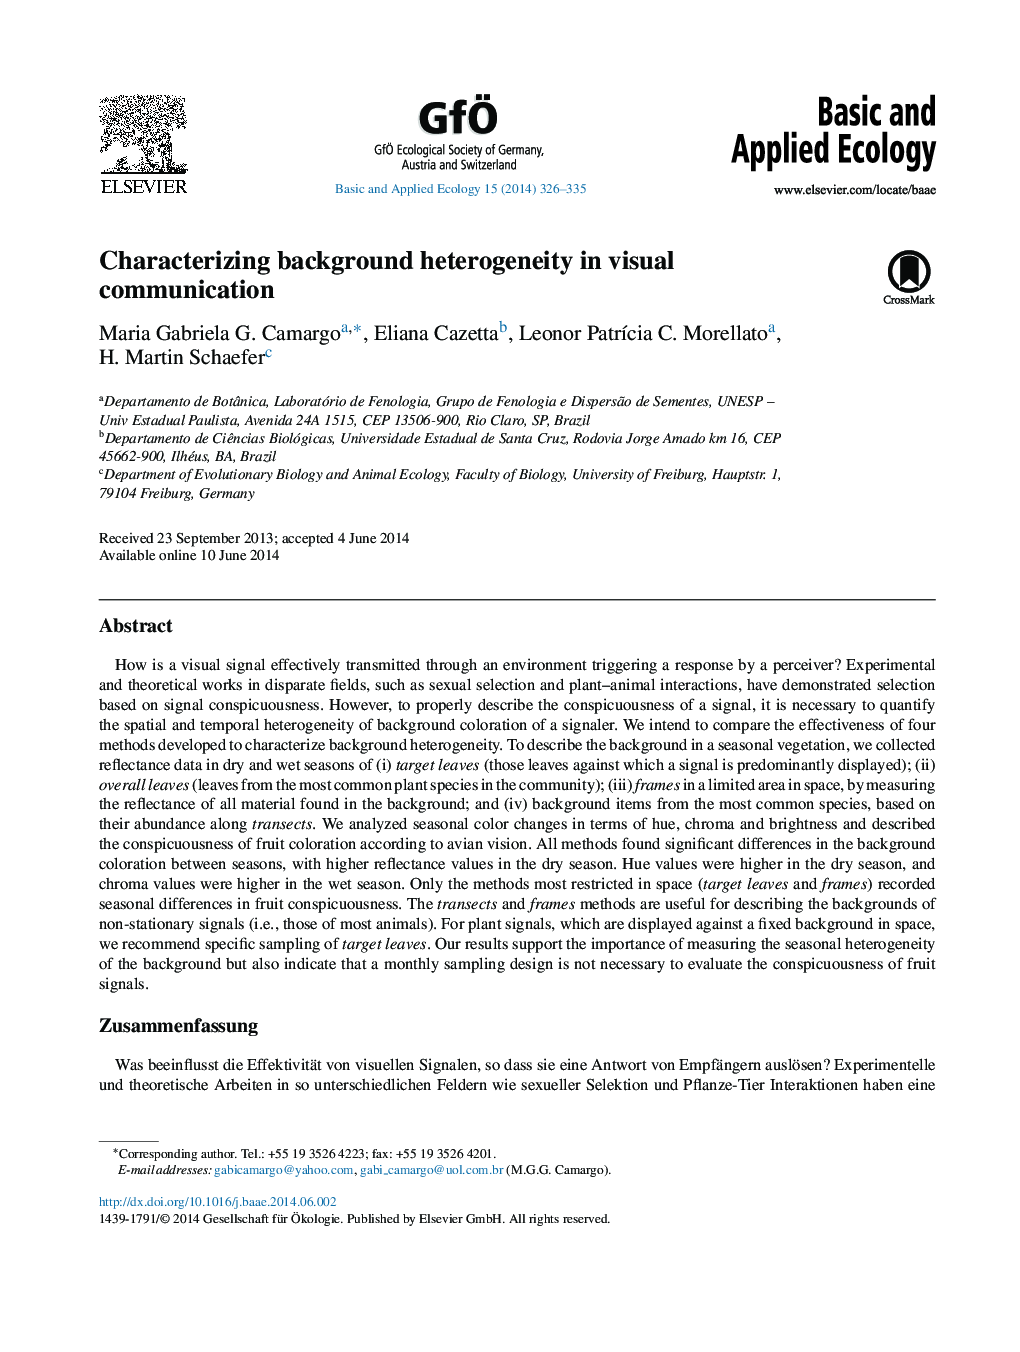 Characterizing background heterogeneity in visual communication